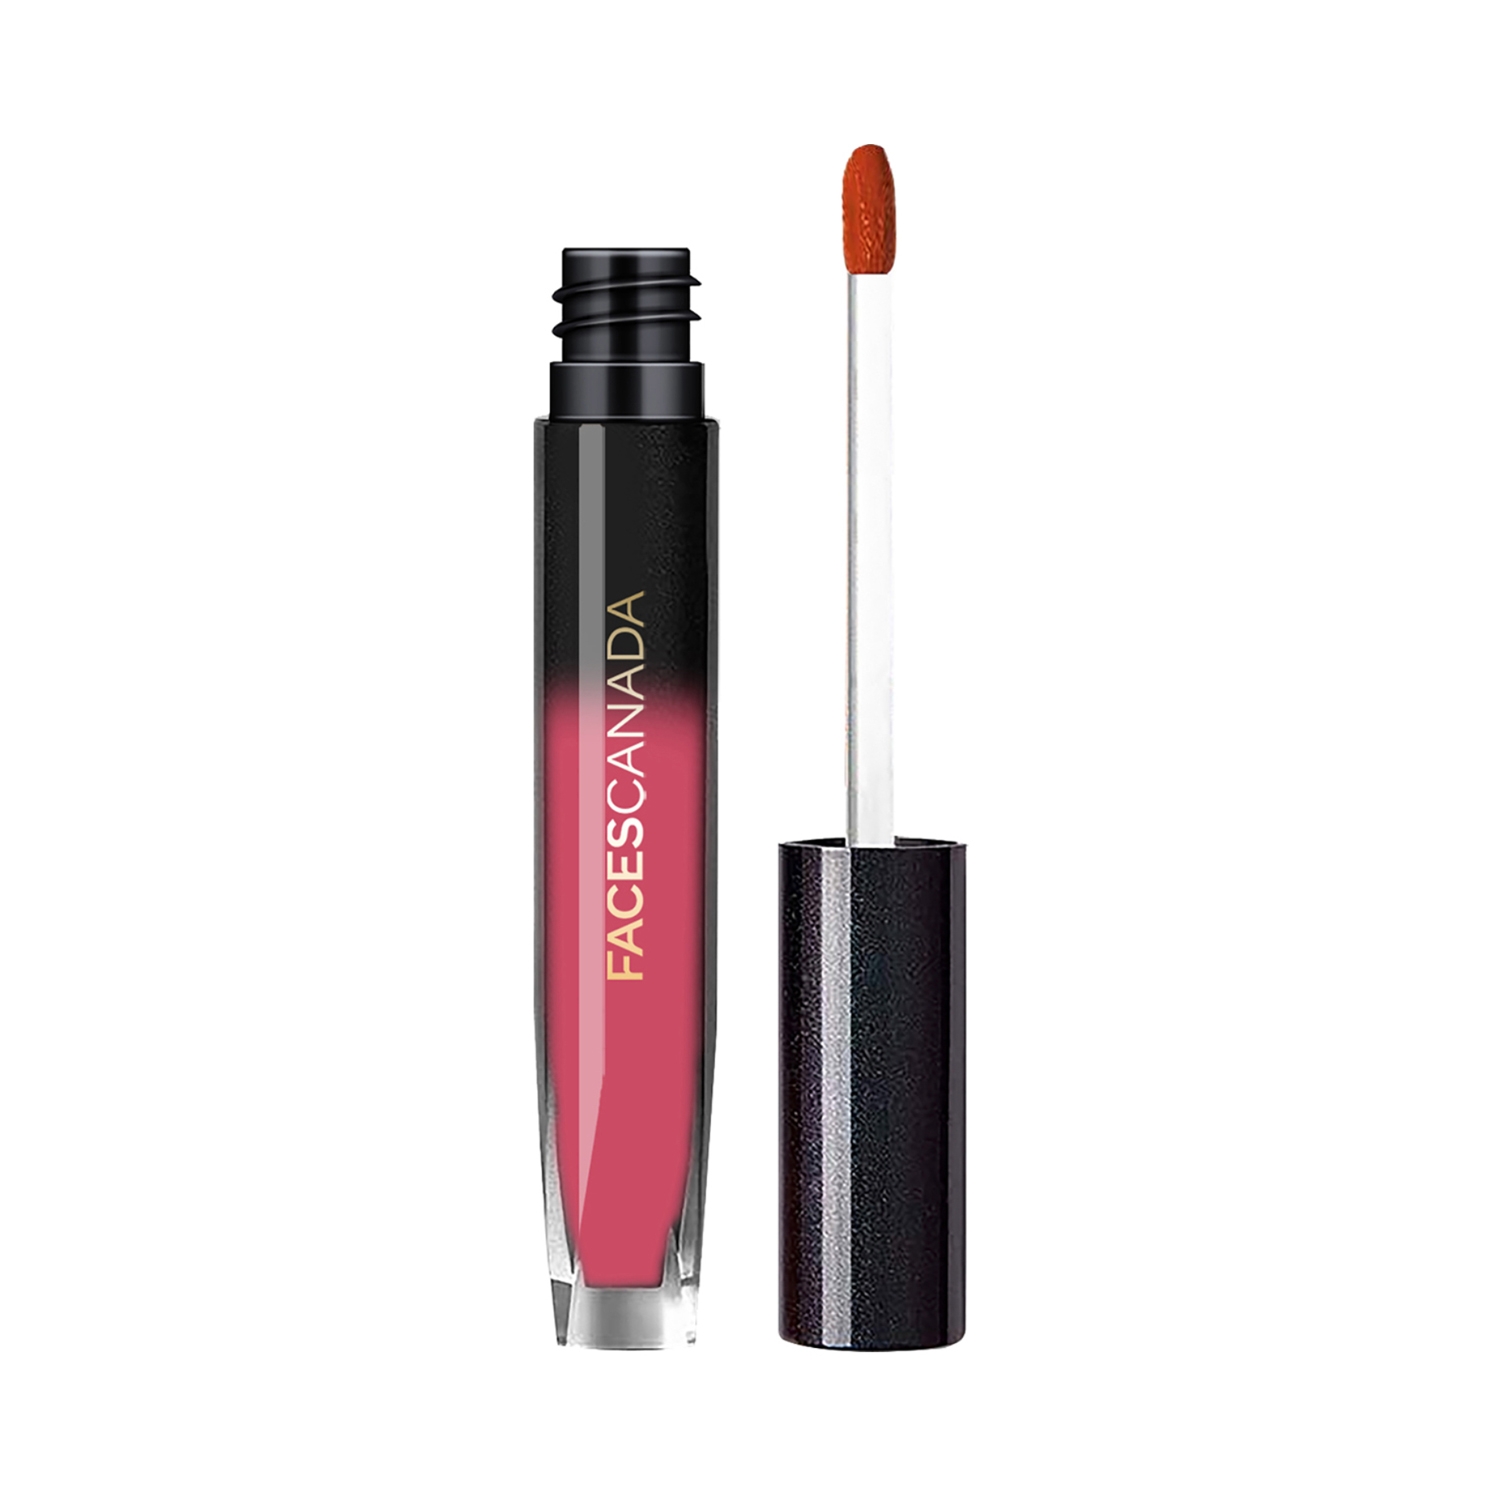 Faces Canada | Faces Canada Comfy Silk Liquid Lipstick - 02 Thriver Pink (4ml)